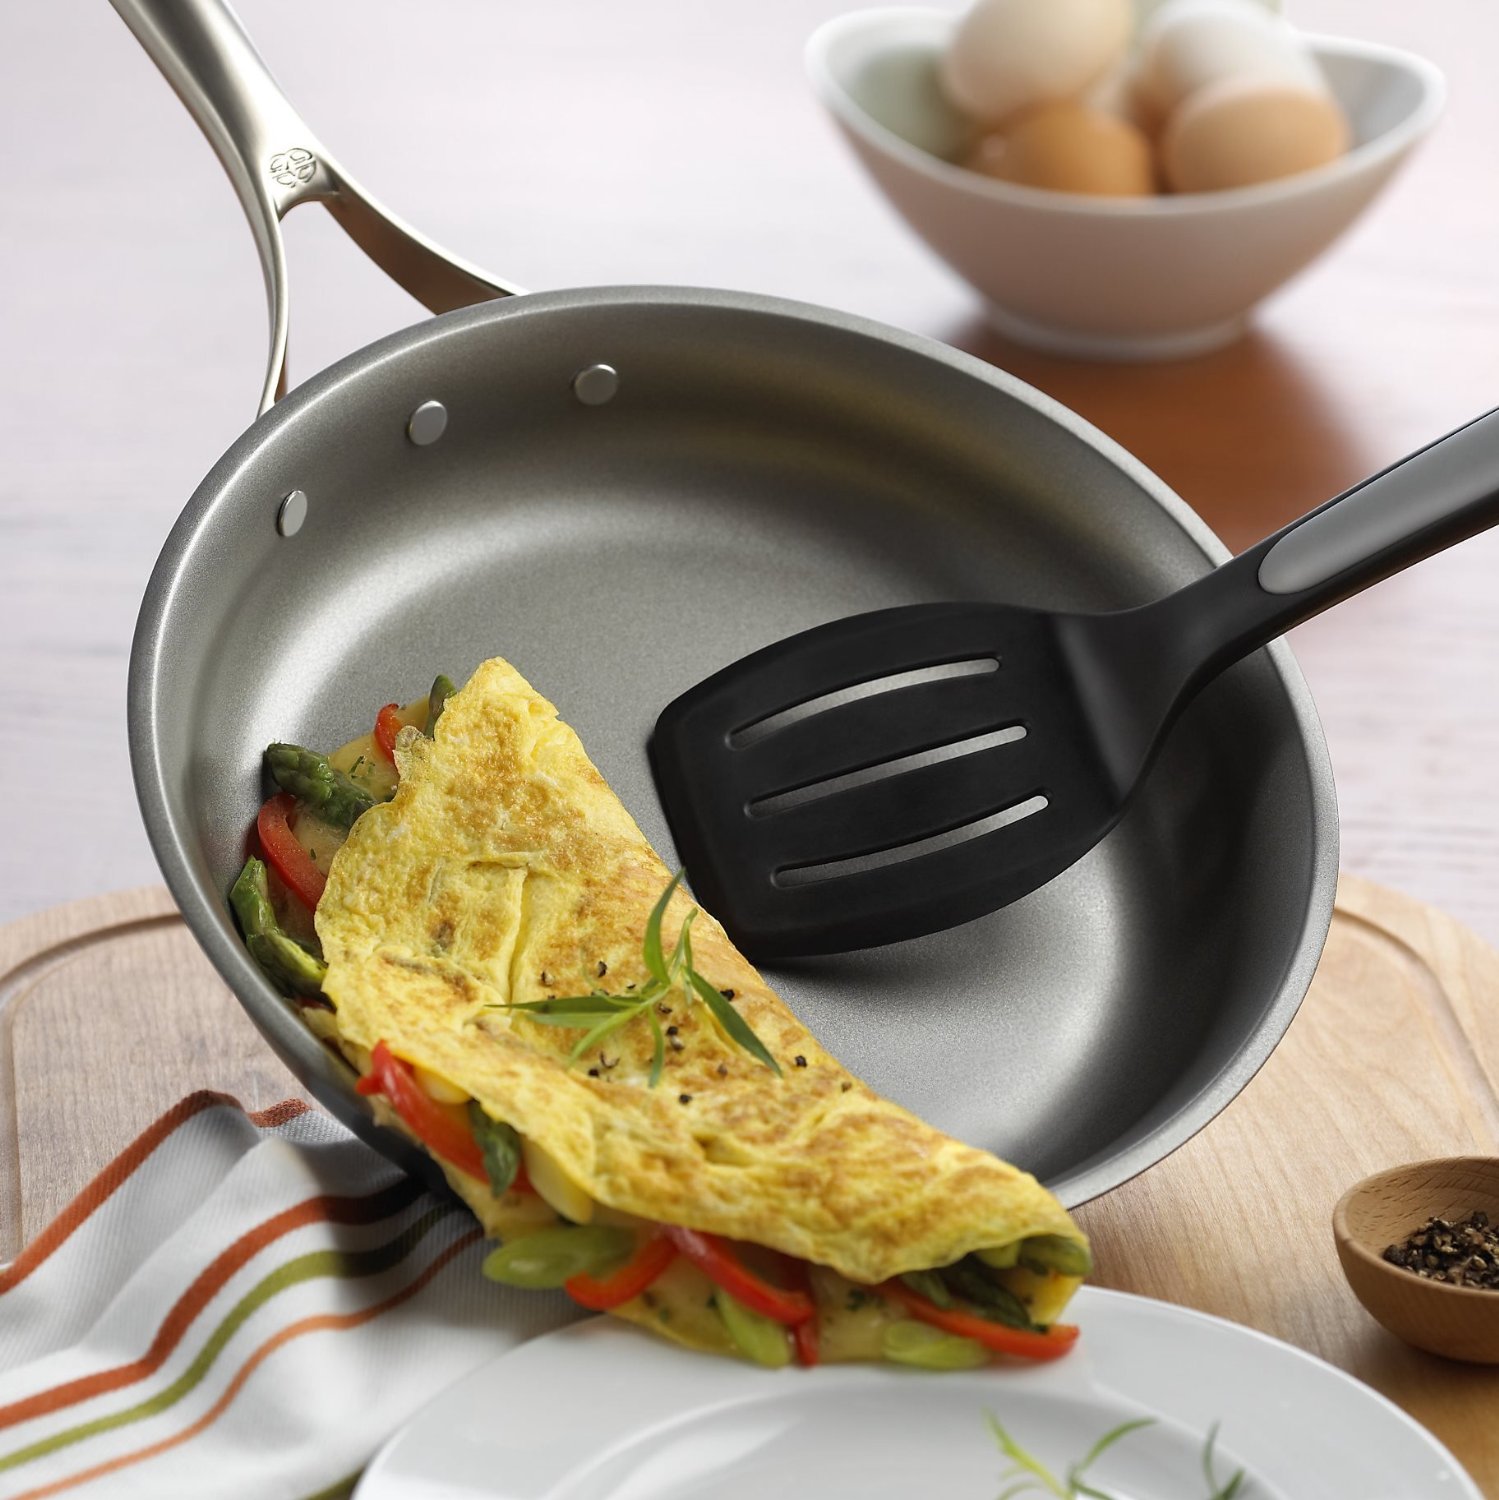 Best Omelette Pan - The Skillet For Your Eggs